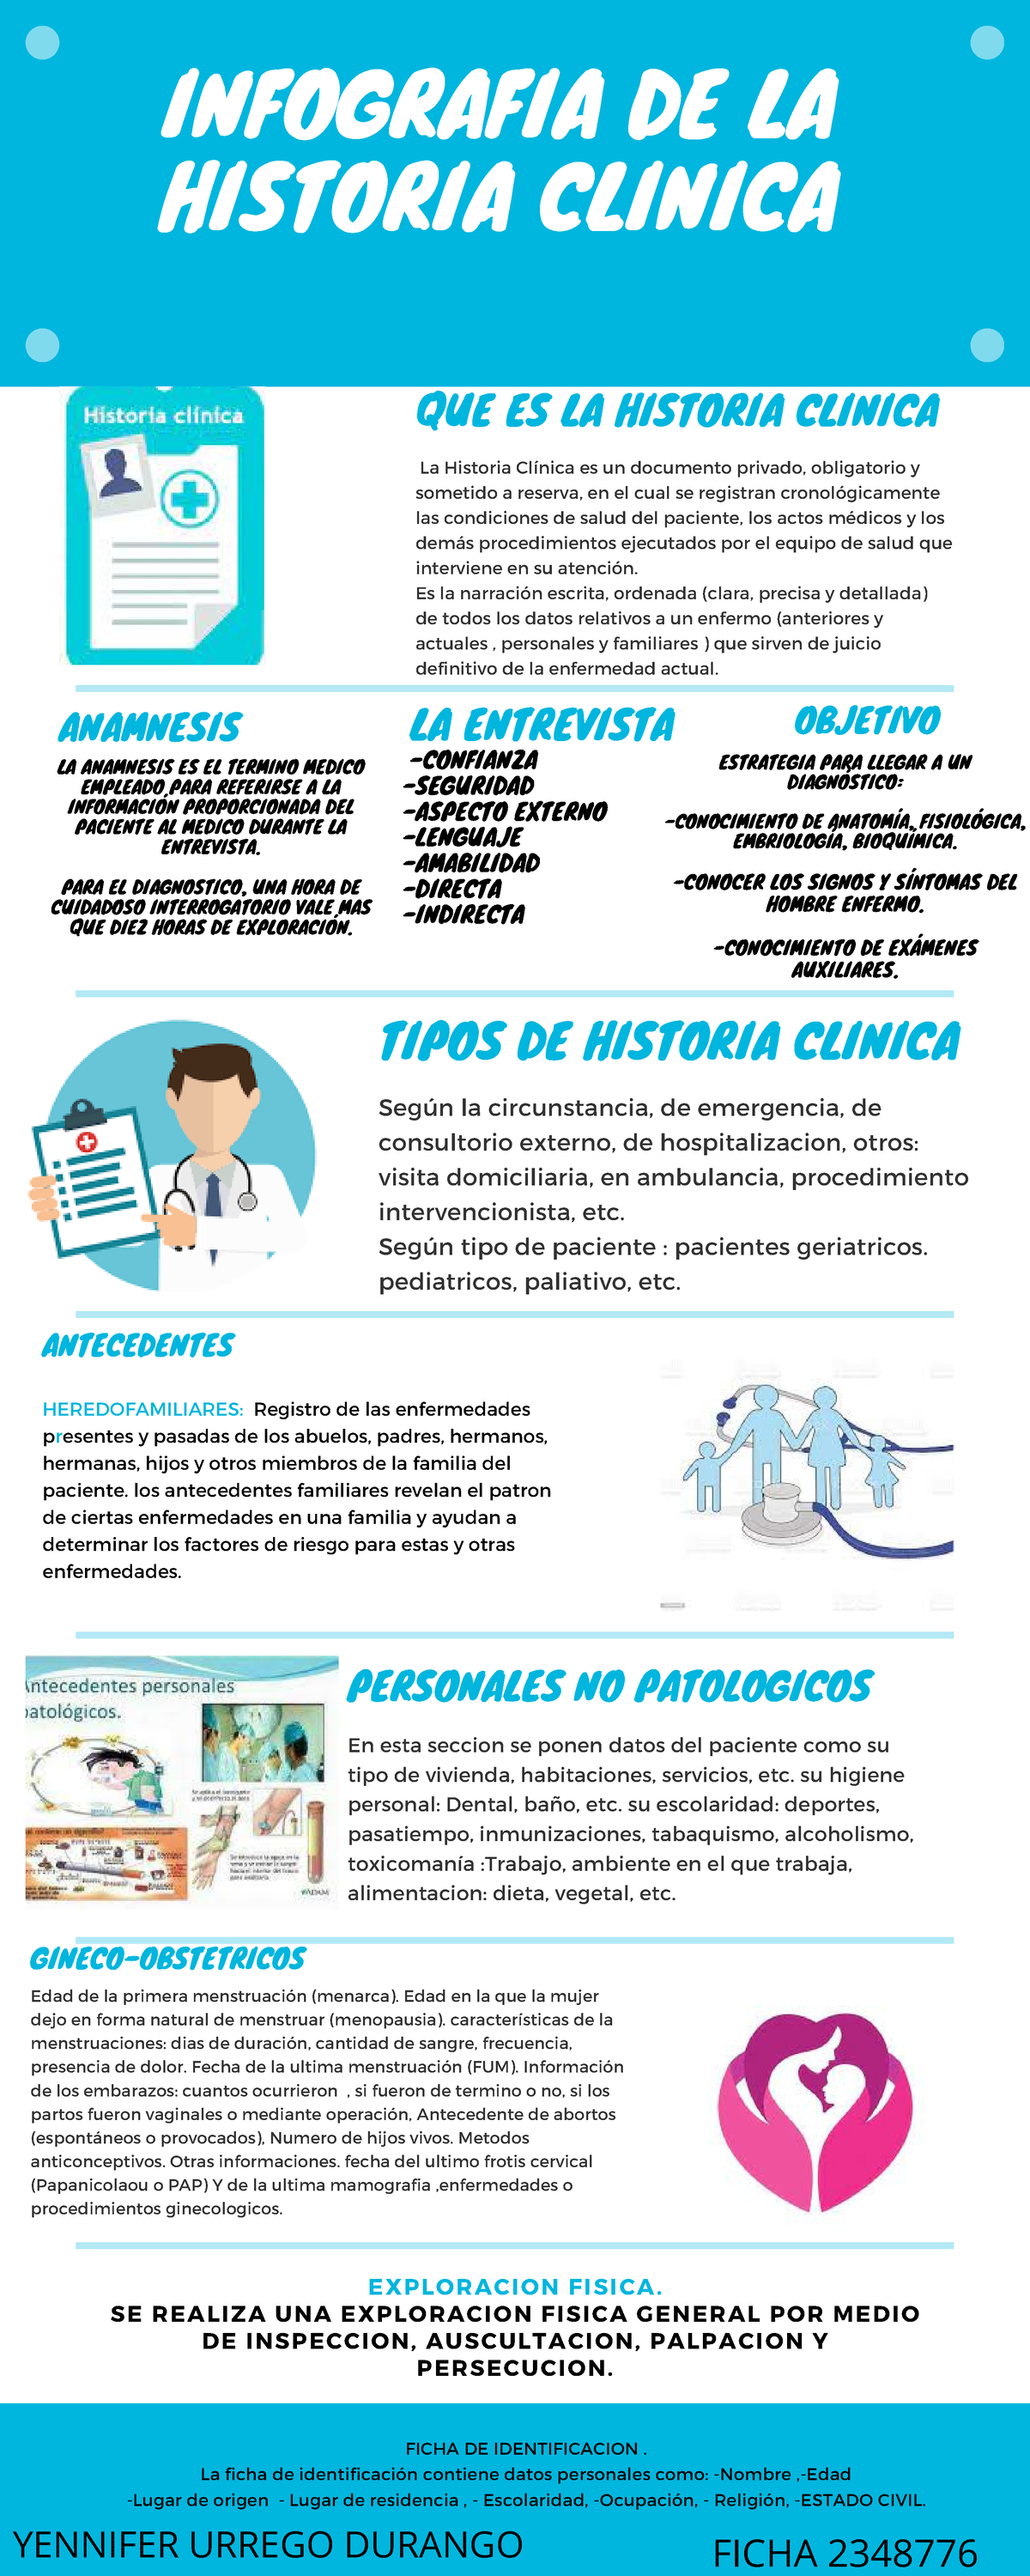 Infografías Apuntes 10 Infografia De La Historia Clinica Que Es La Historia Clinica La 2513